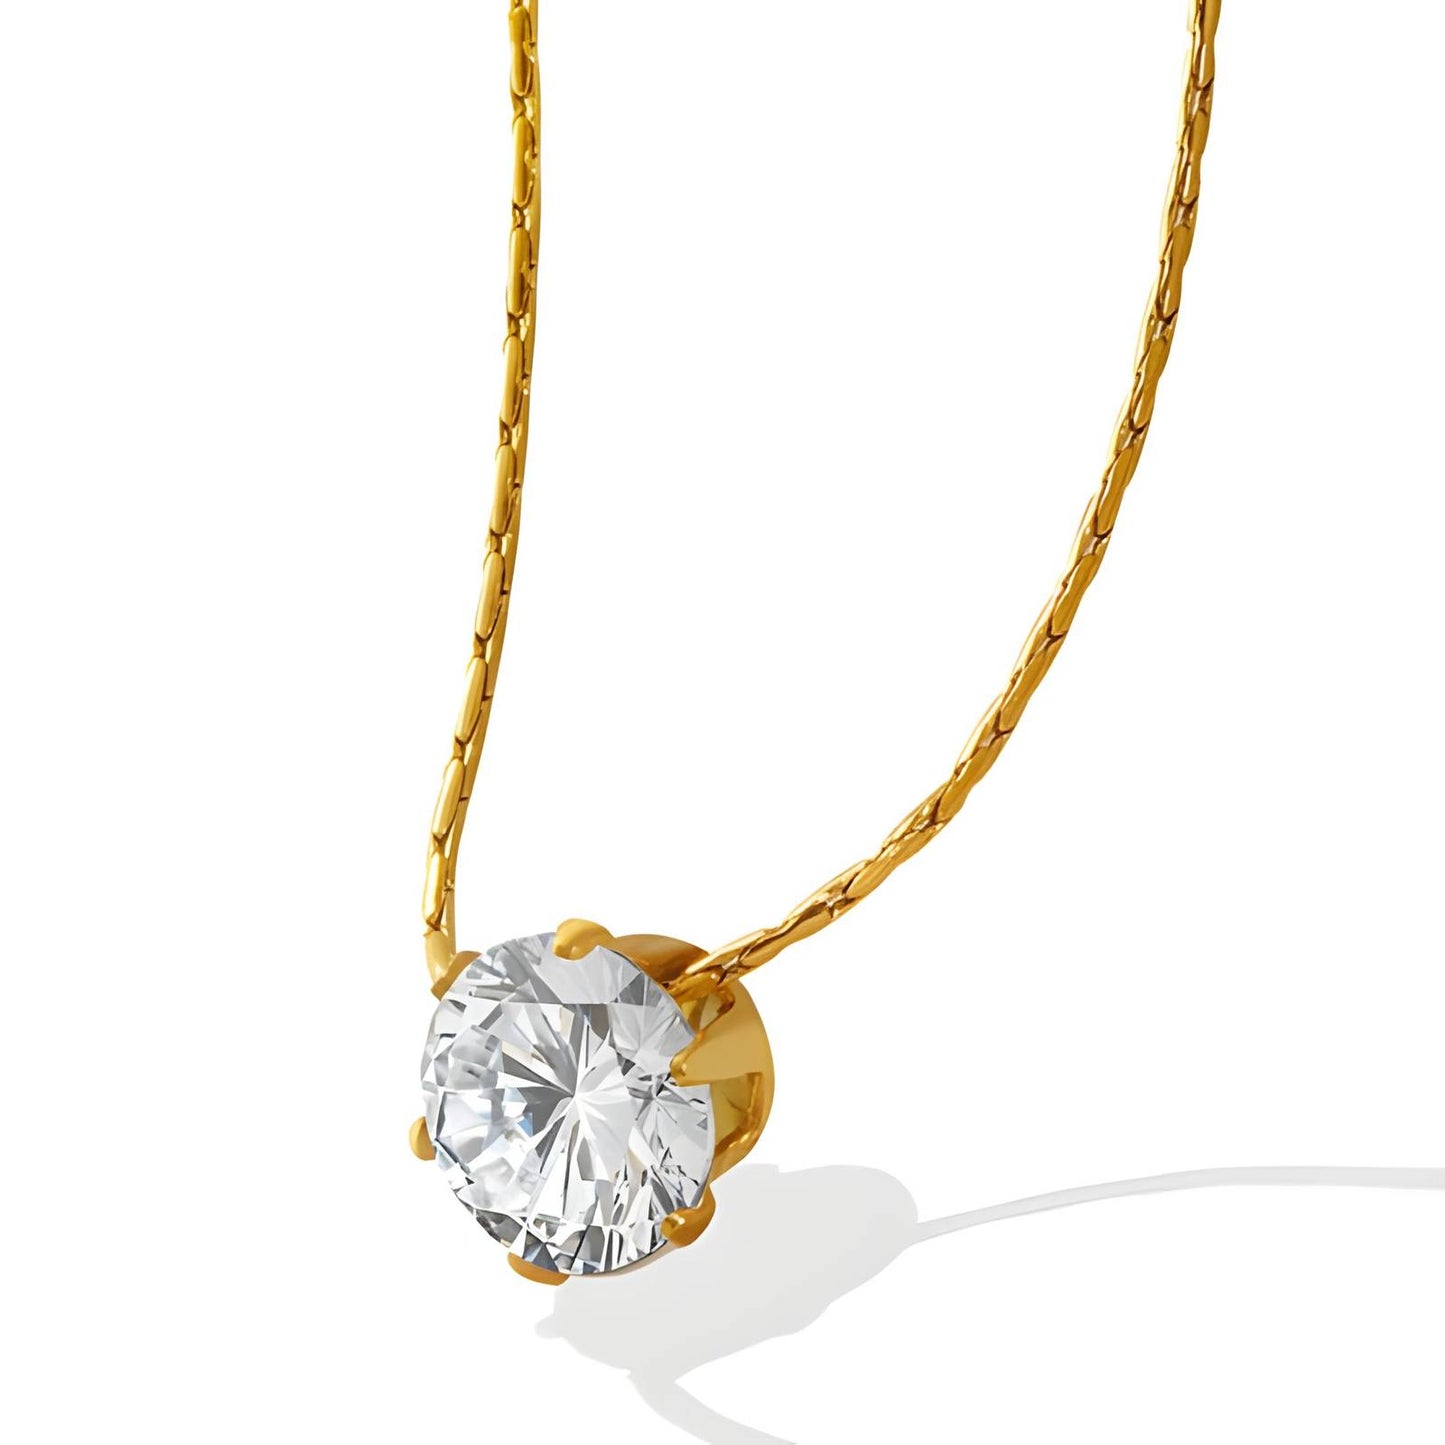 Timeless Beauty: Petite Zirconia Pendant on a Fine Gold Necklace